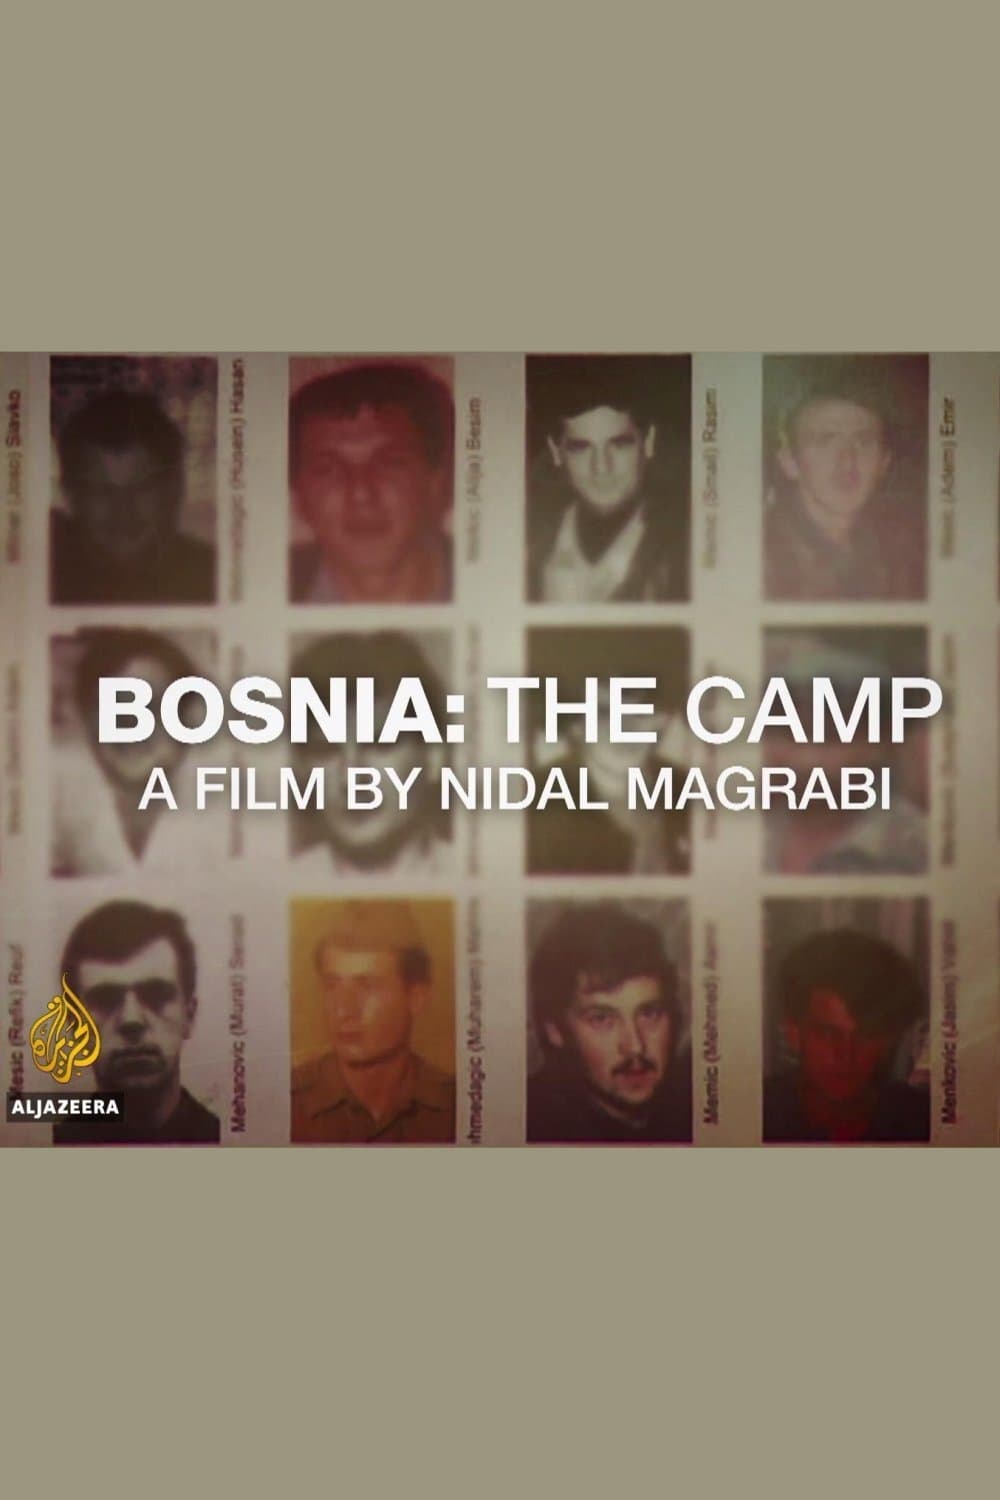 Bosnia: The Camp